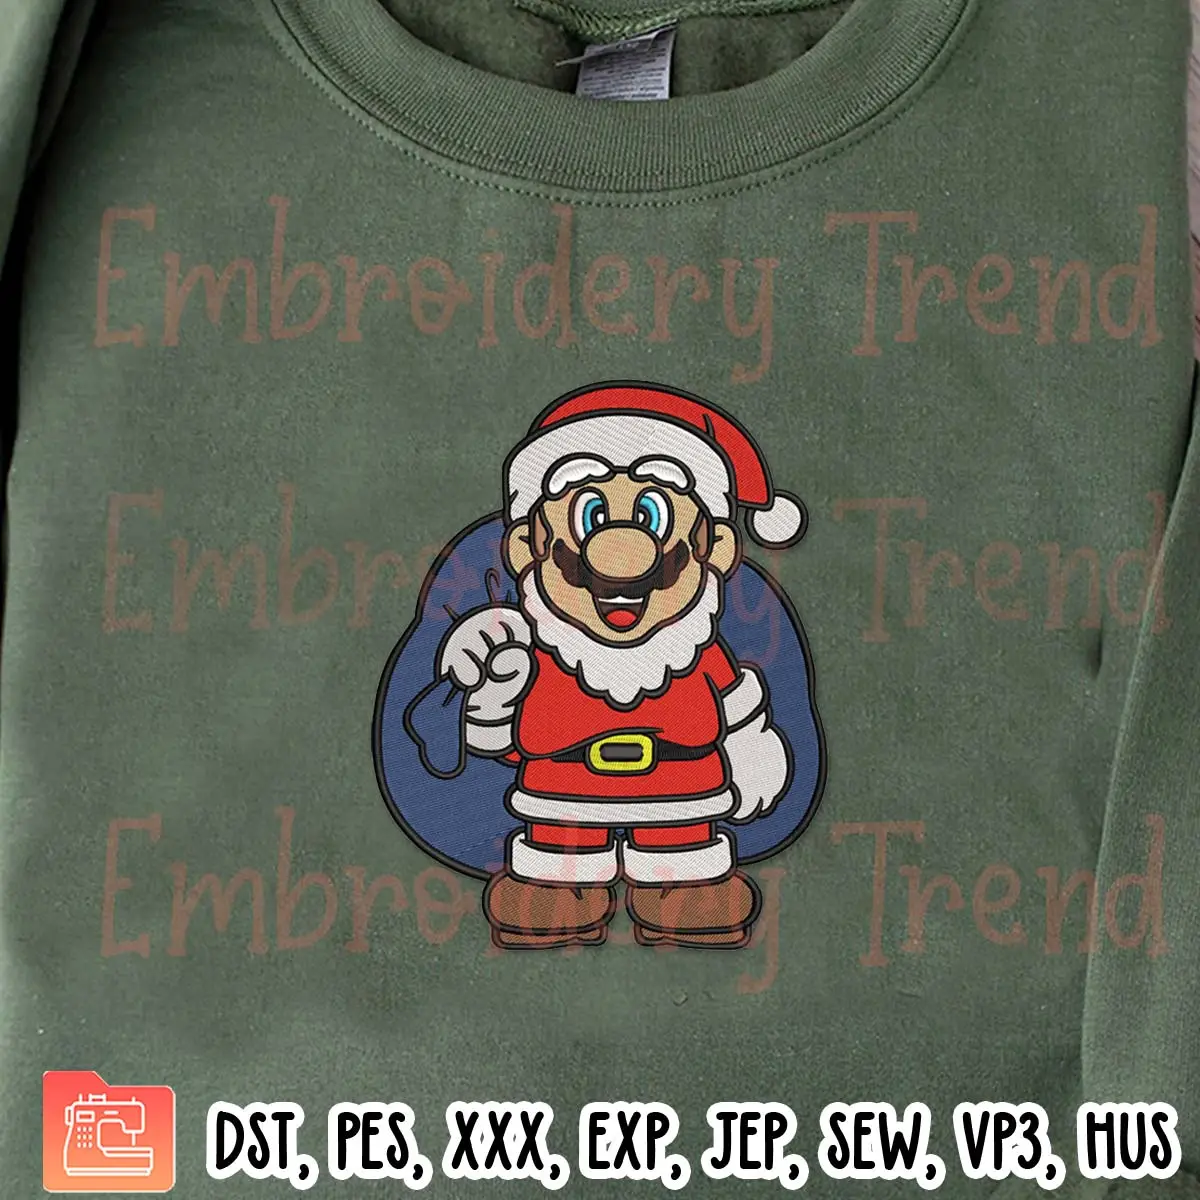 Super Mario Santa Claus Embroidery Design, Christmas Embroidery Digitizing Pes File